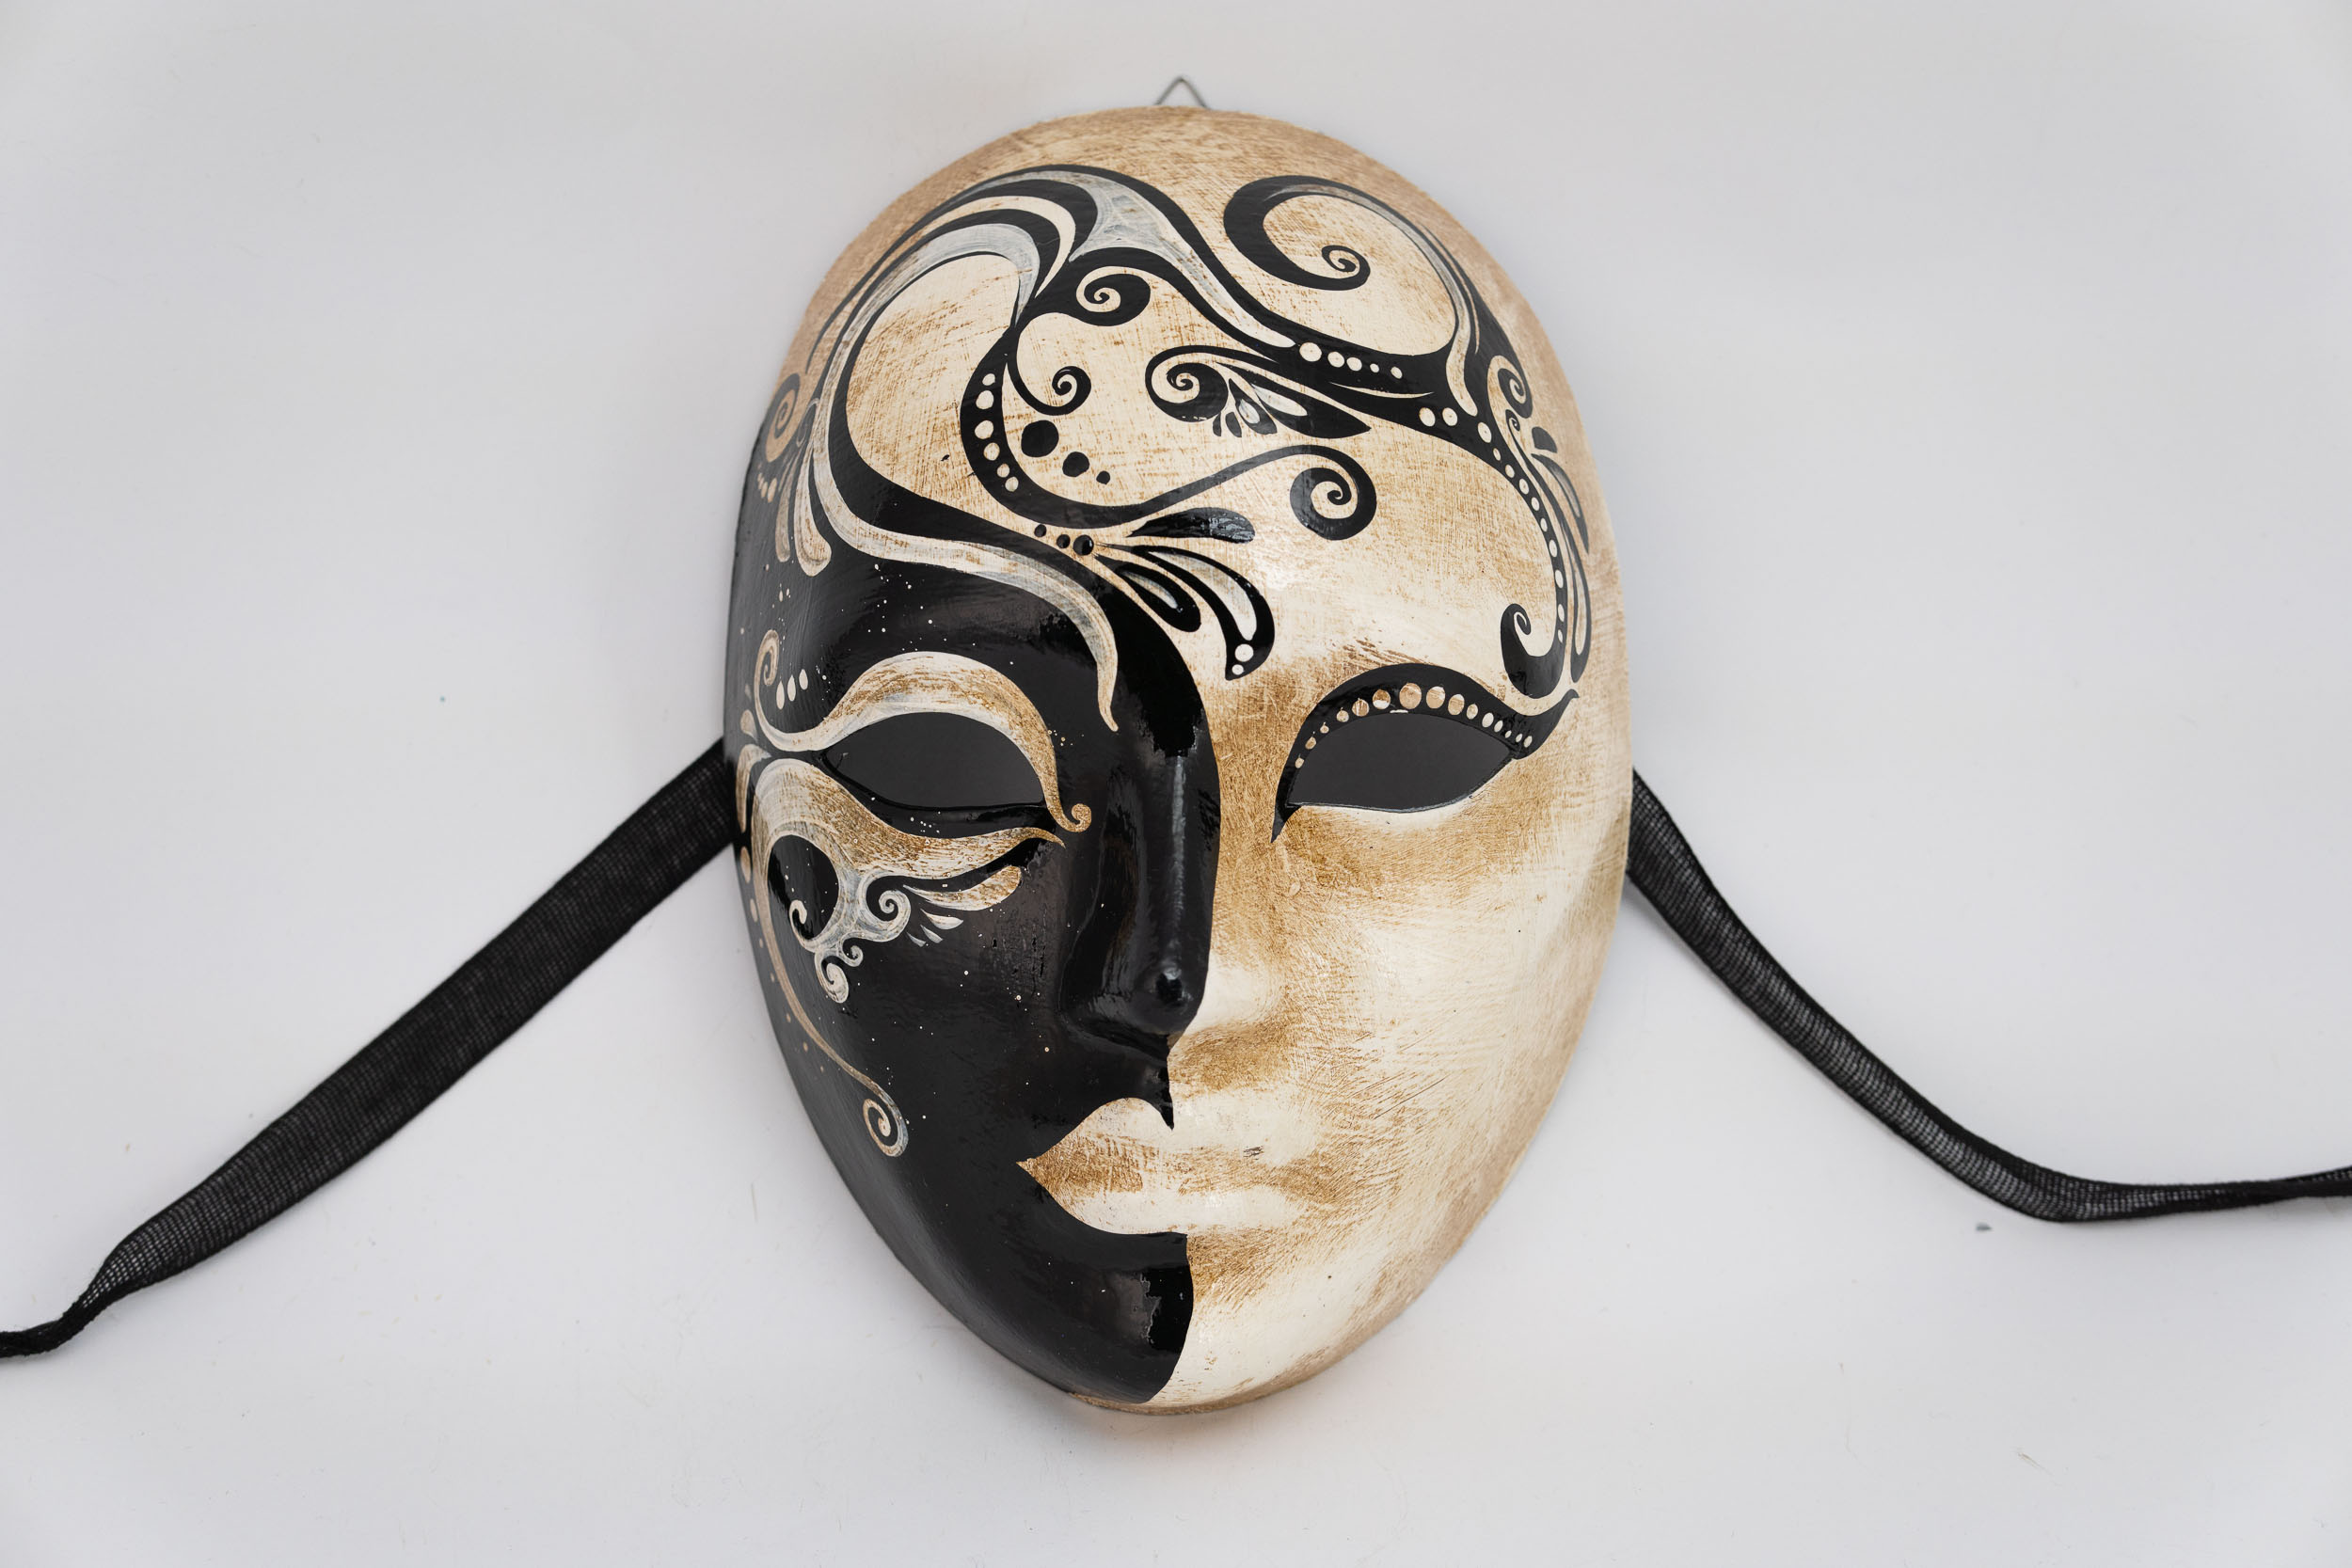 Bauta Full Face White Venetian Party Mask Masquerade - Silver 